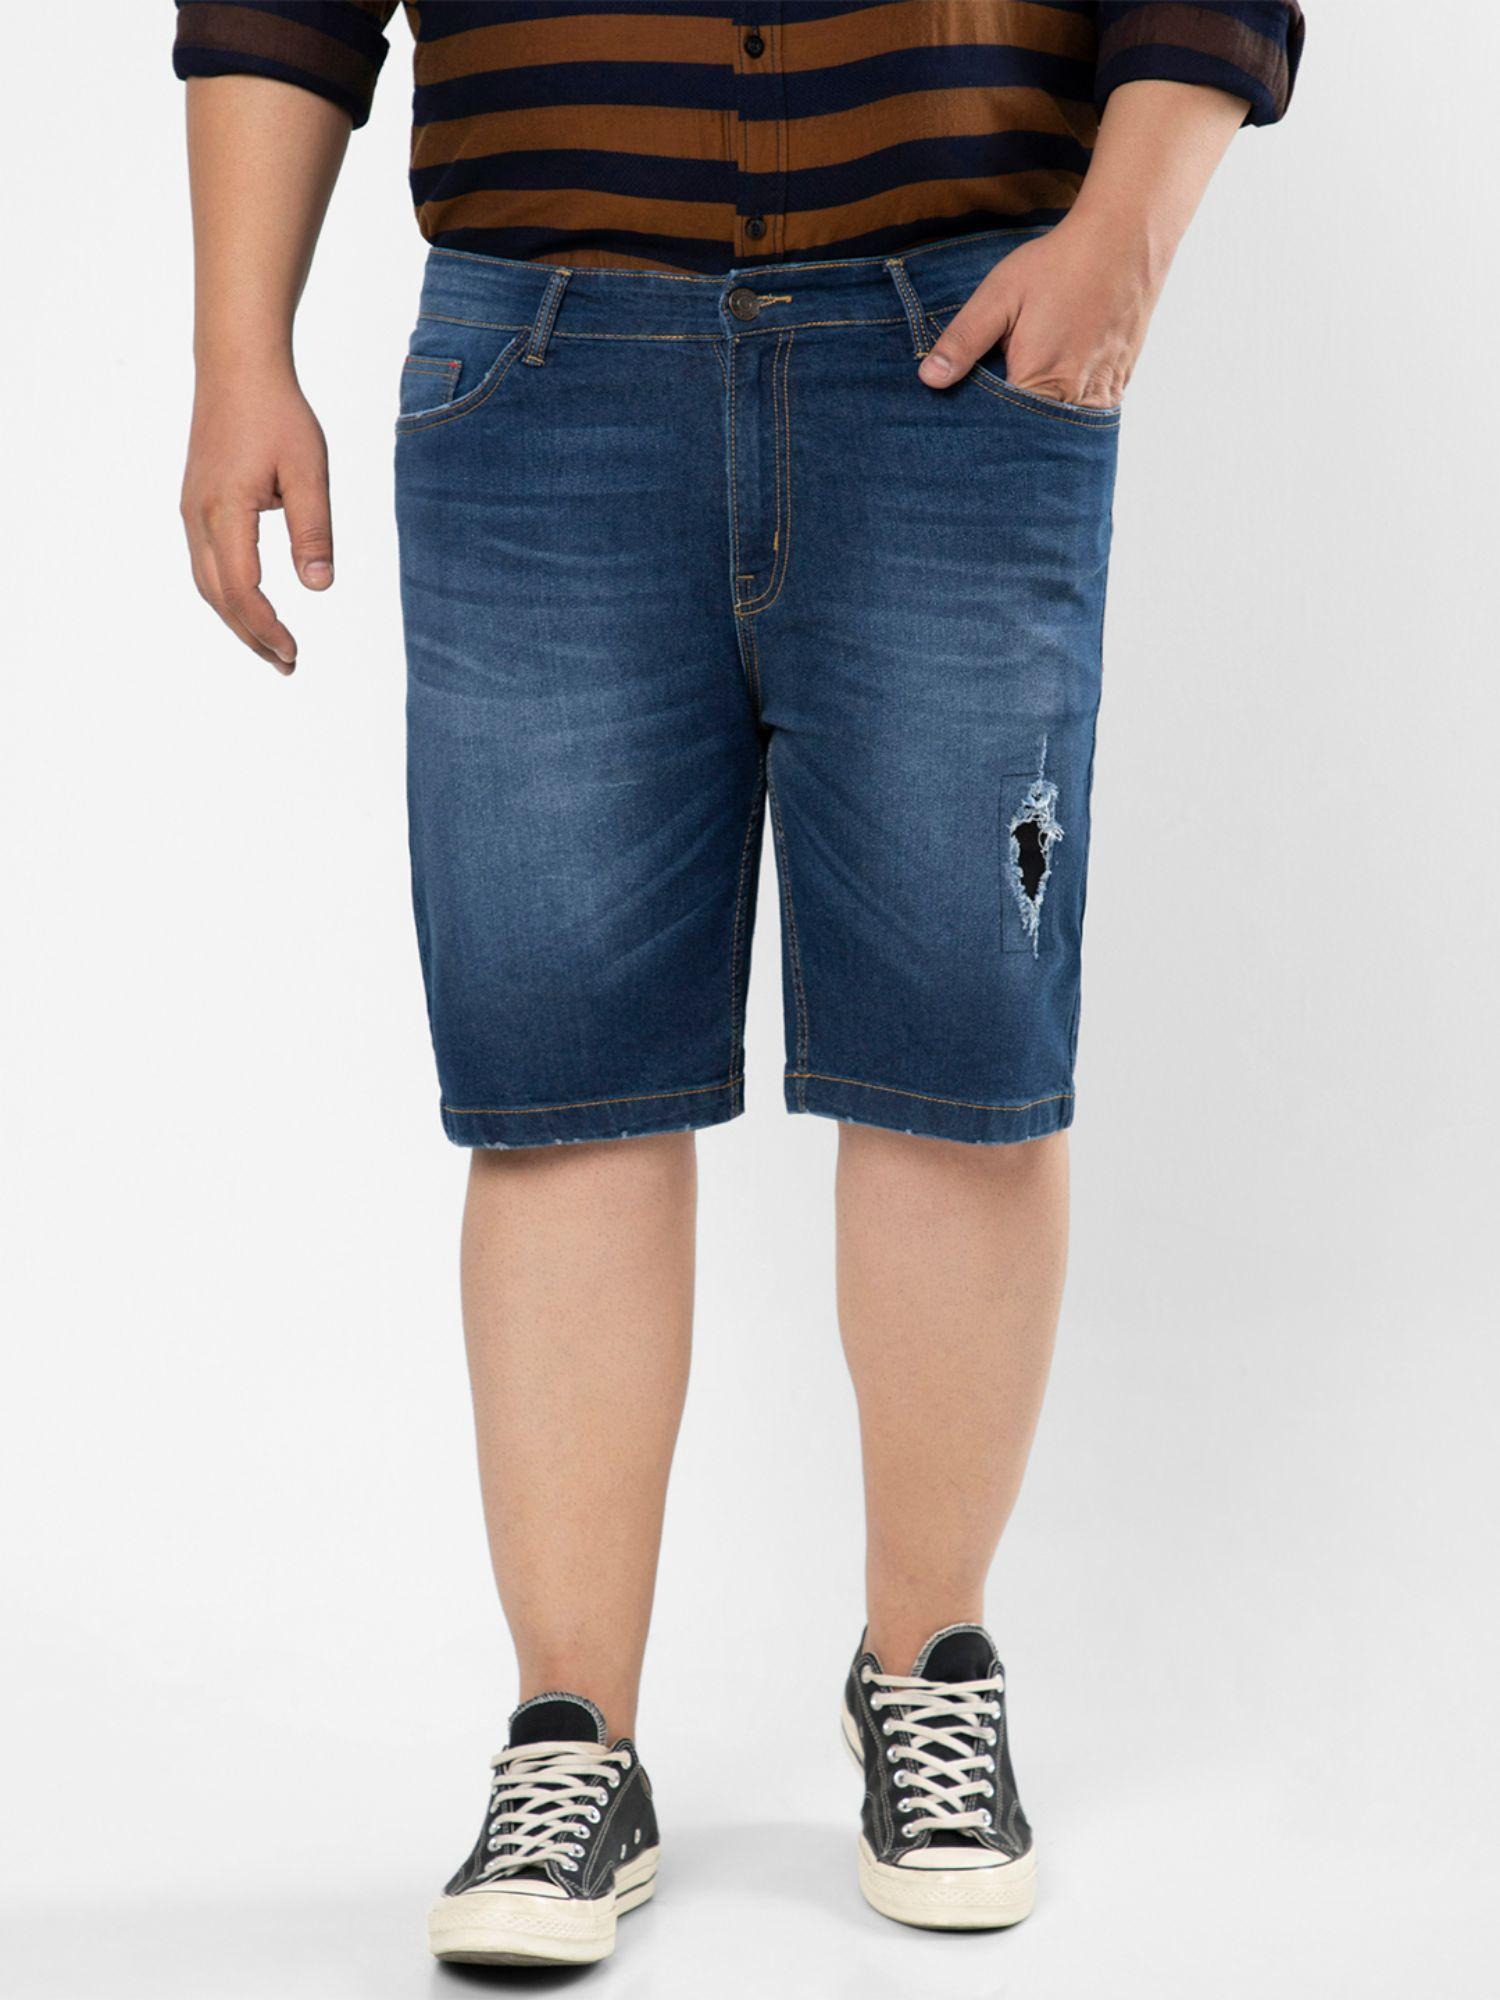 size men's solid torn stylish denim shorts,navy blue